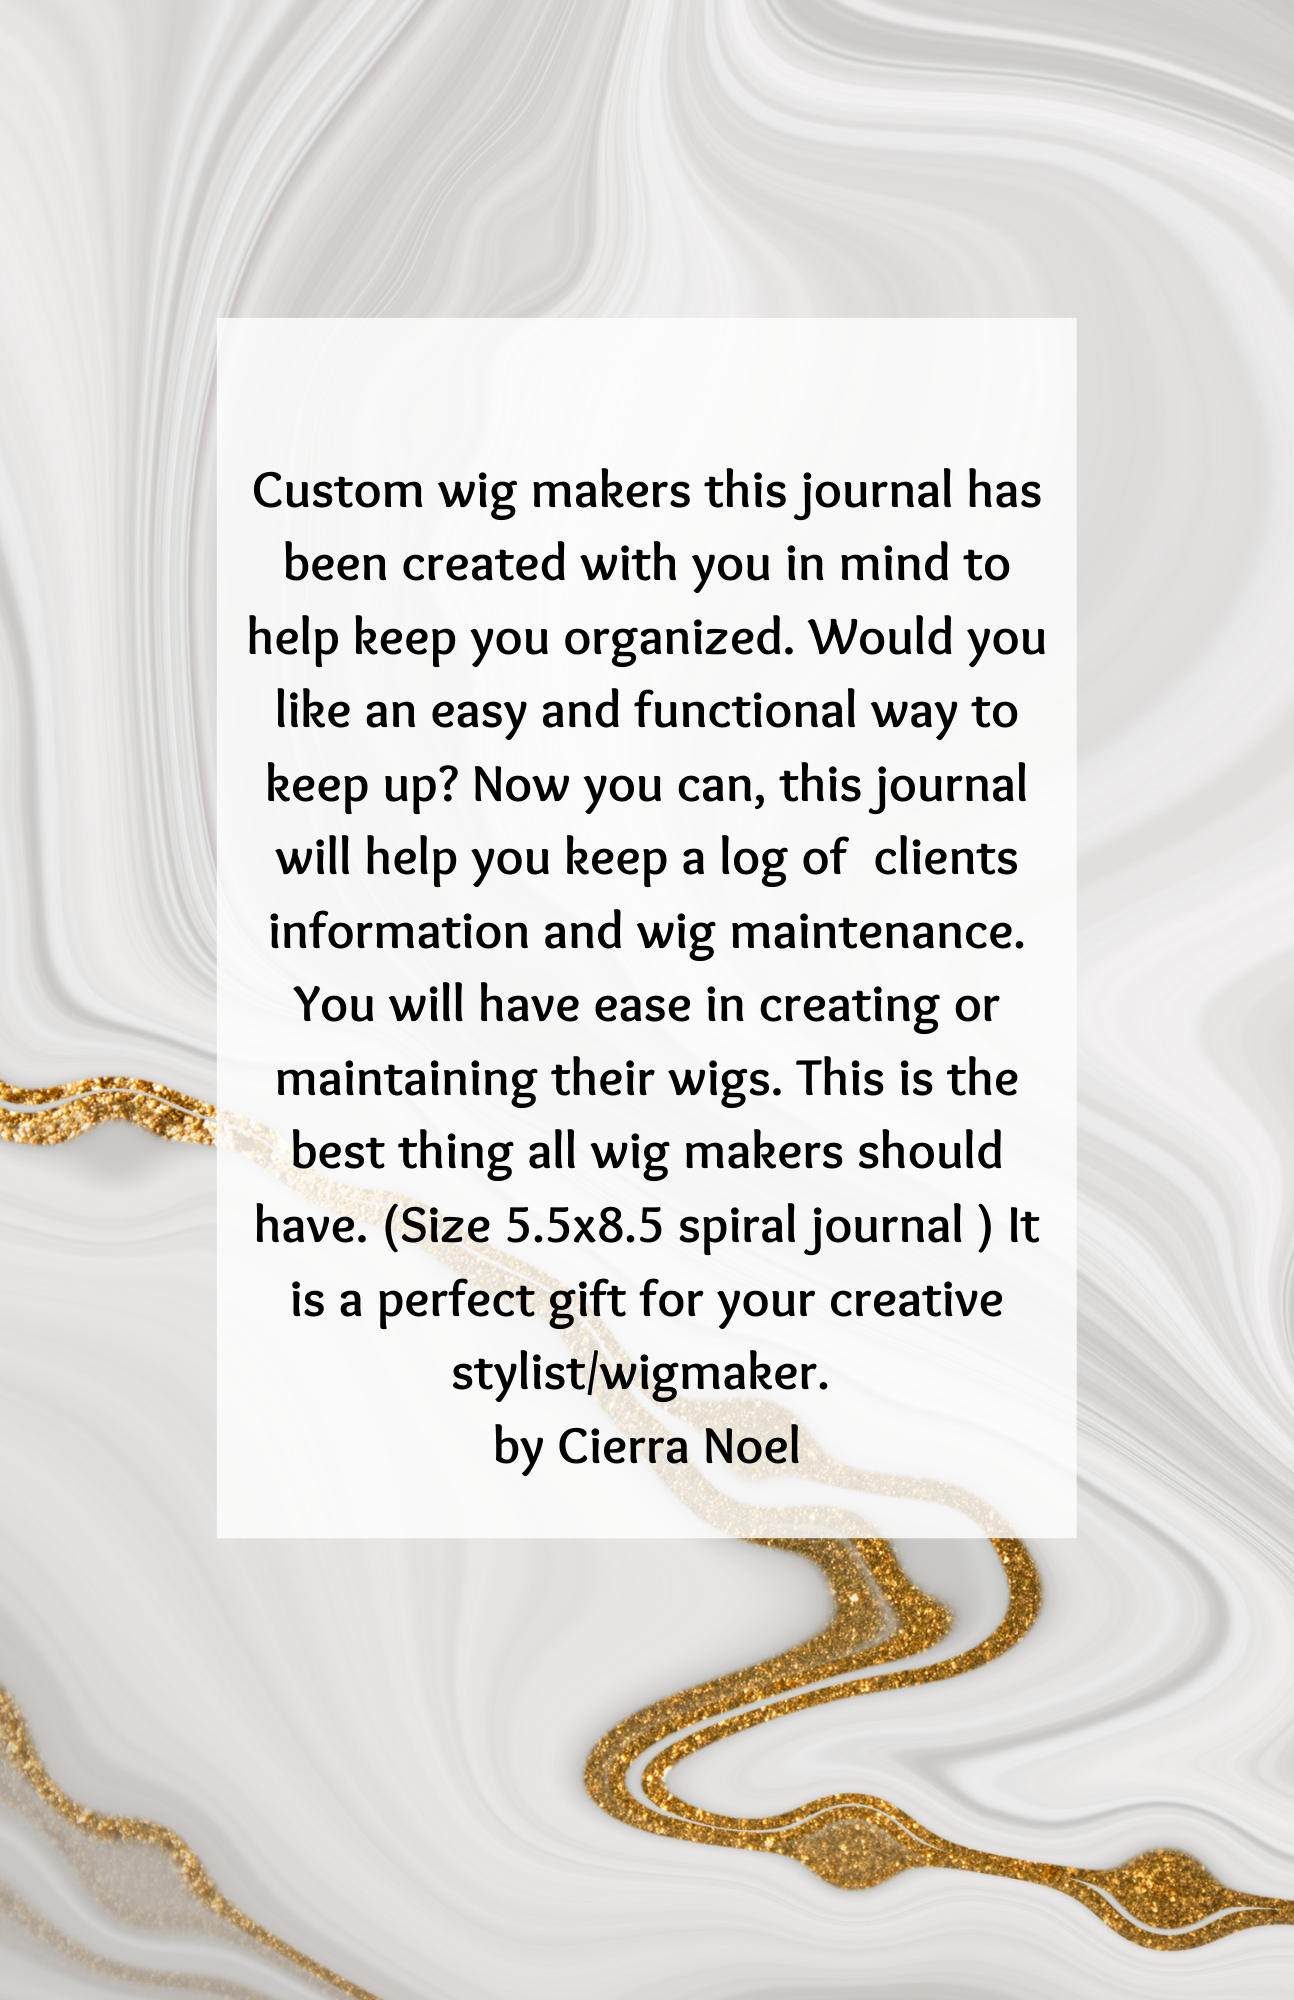 My Custom Wig Journal